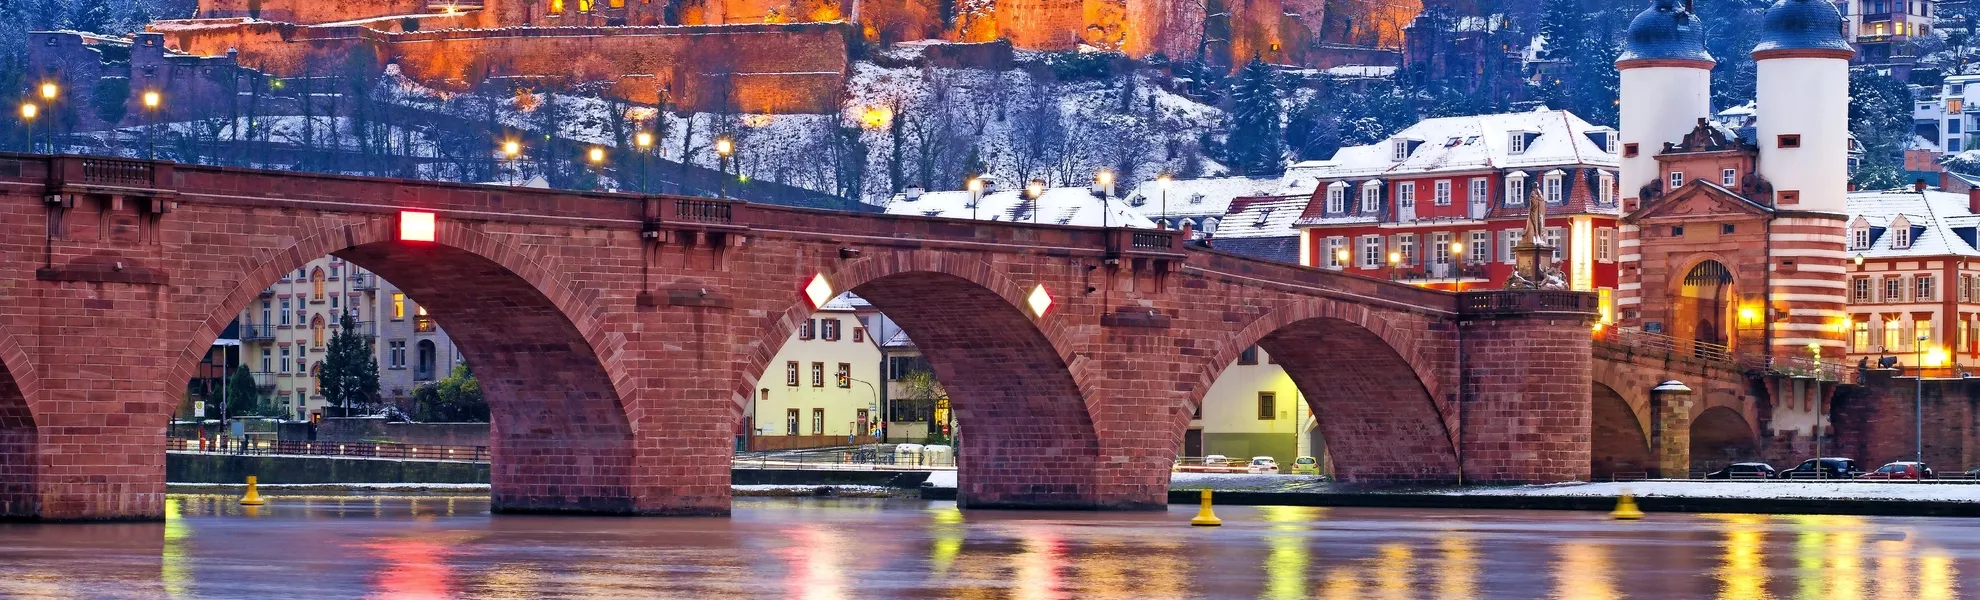 Heidelberger Schloss im Winter - © eyetronic - stock.adobe.com